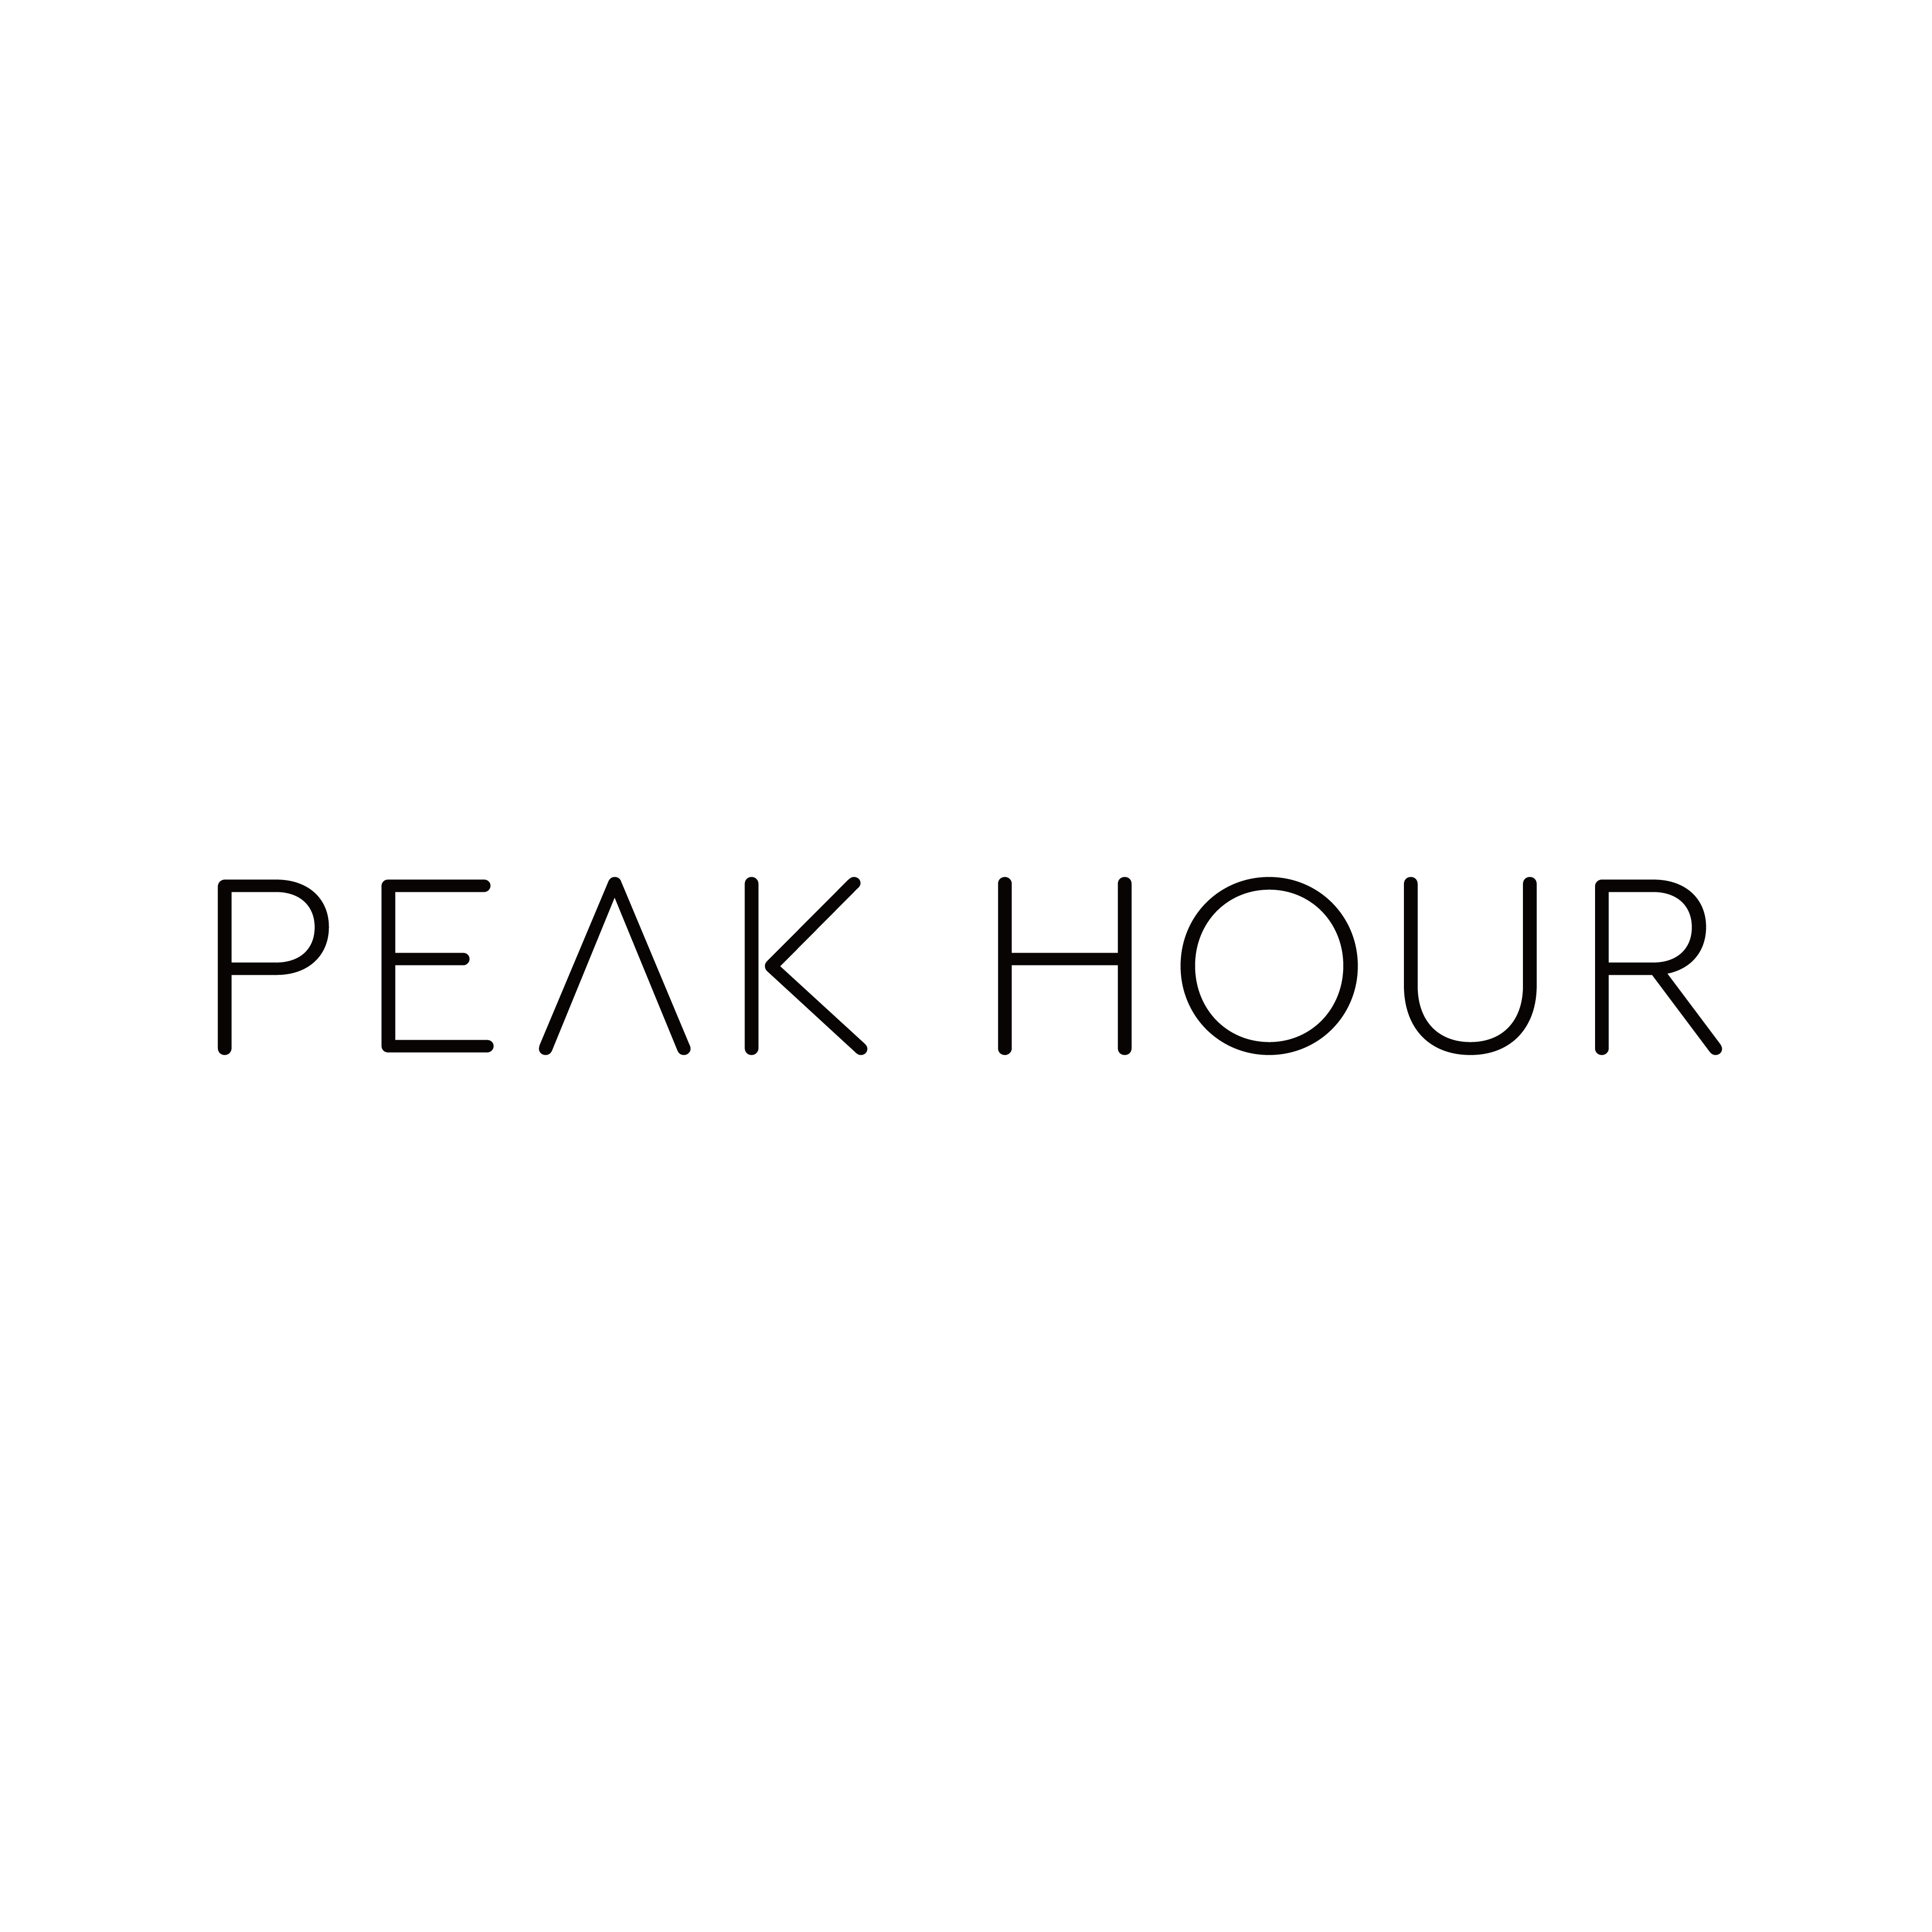 PEAK HOUR logo